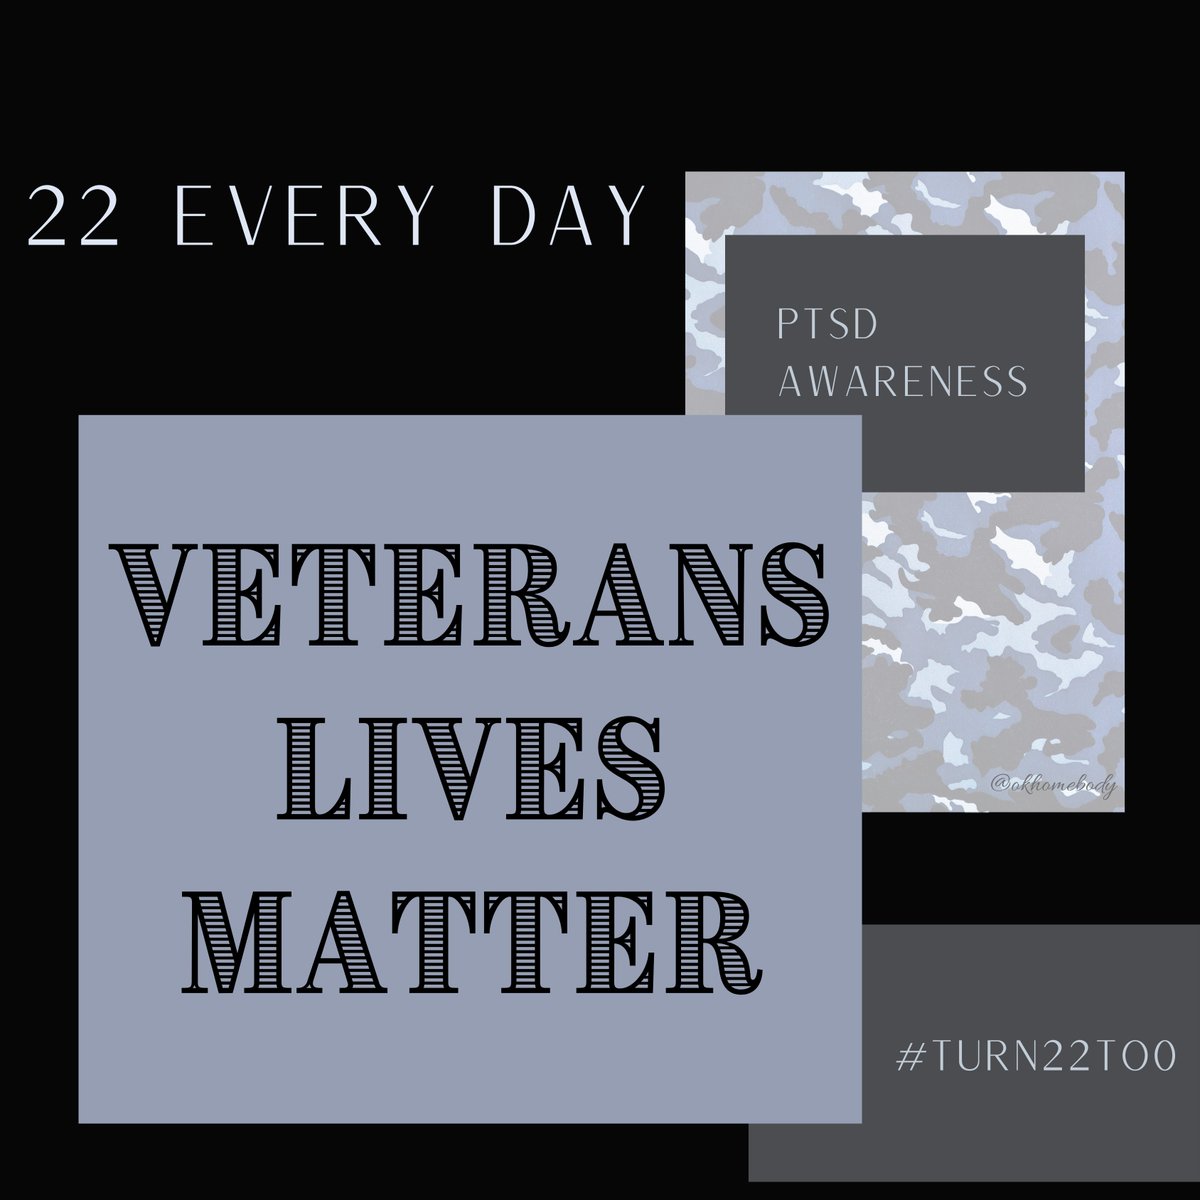 🇺🇸 #ThoughtfulTuesday #Buddy✅with #Veterans 🙏RH
❤️#BuddyChecksMatter because #VeteransLivesMatter❤️
⭐️ 🇺🇸 Repost #EndVeteranSuicide #dial988press1 🇺🇸⭐️
🇺🇸@RealUSAFVeteran @BoumaDon @jkelly666 ✈️
🇺🇸@edd61903044 @IDMooseMan @StroupeRick✈️
🇺🇸@MikeCorkSr1 @BollingerTodd…